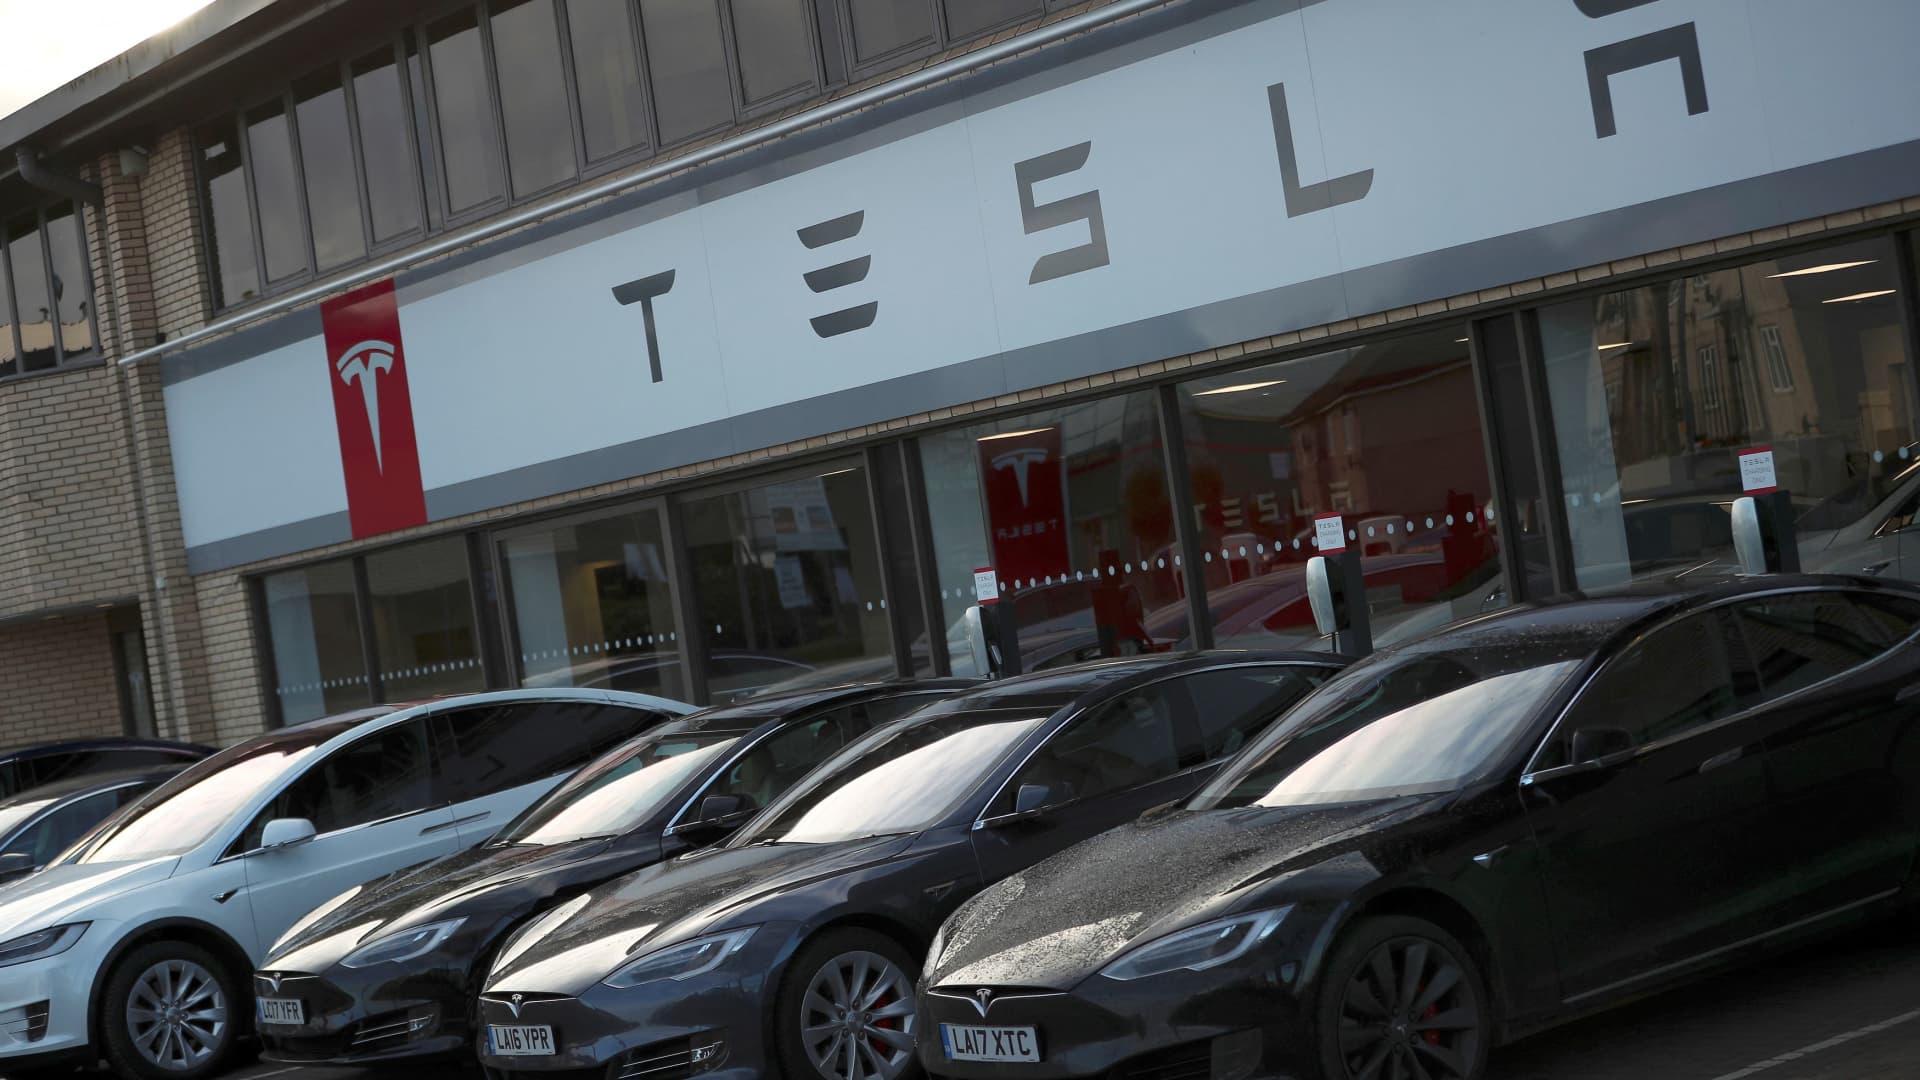 Buy Tesla in the short term to capture potential upside from earnings, says Deutsche Bank